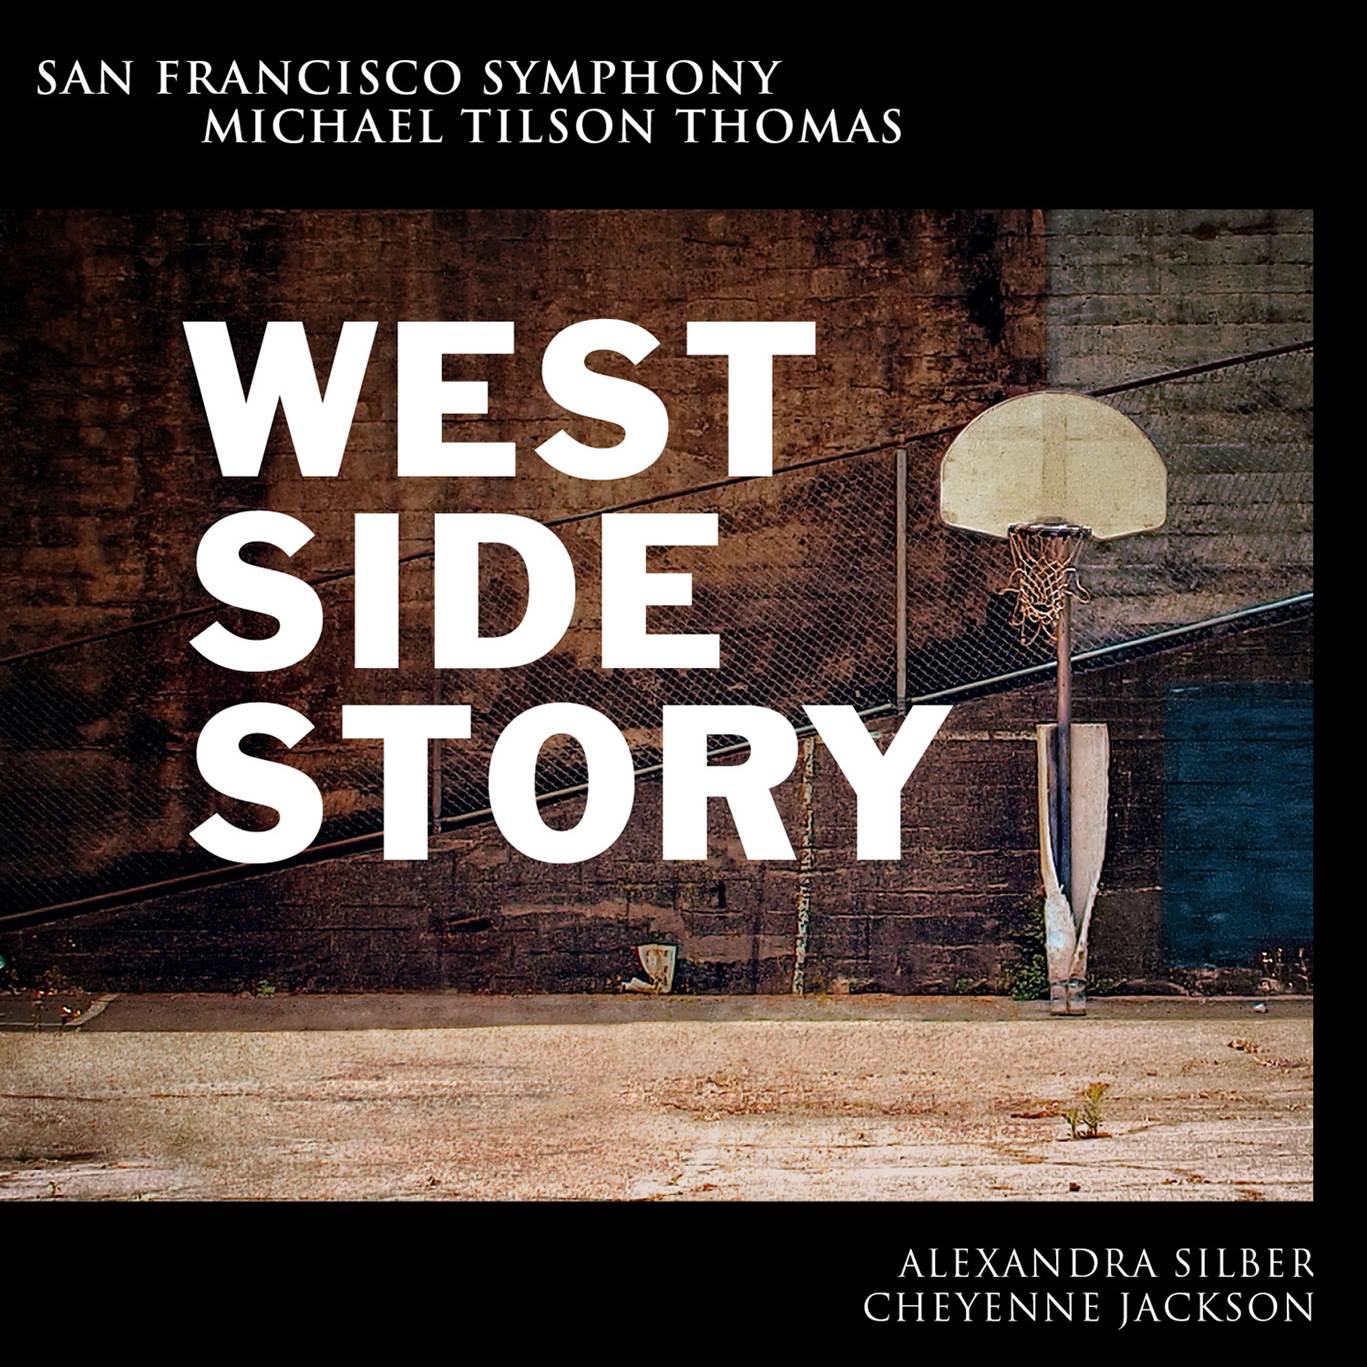 WEST SIDE STORY - San Francisco Symphony Album